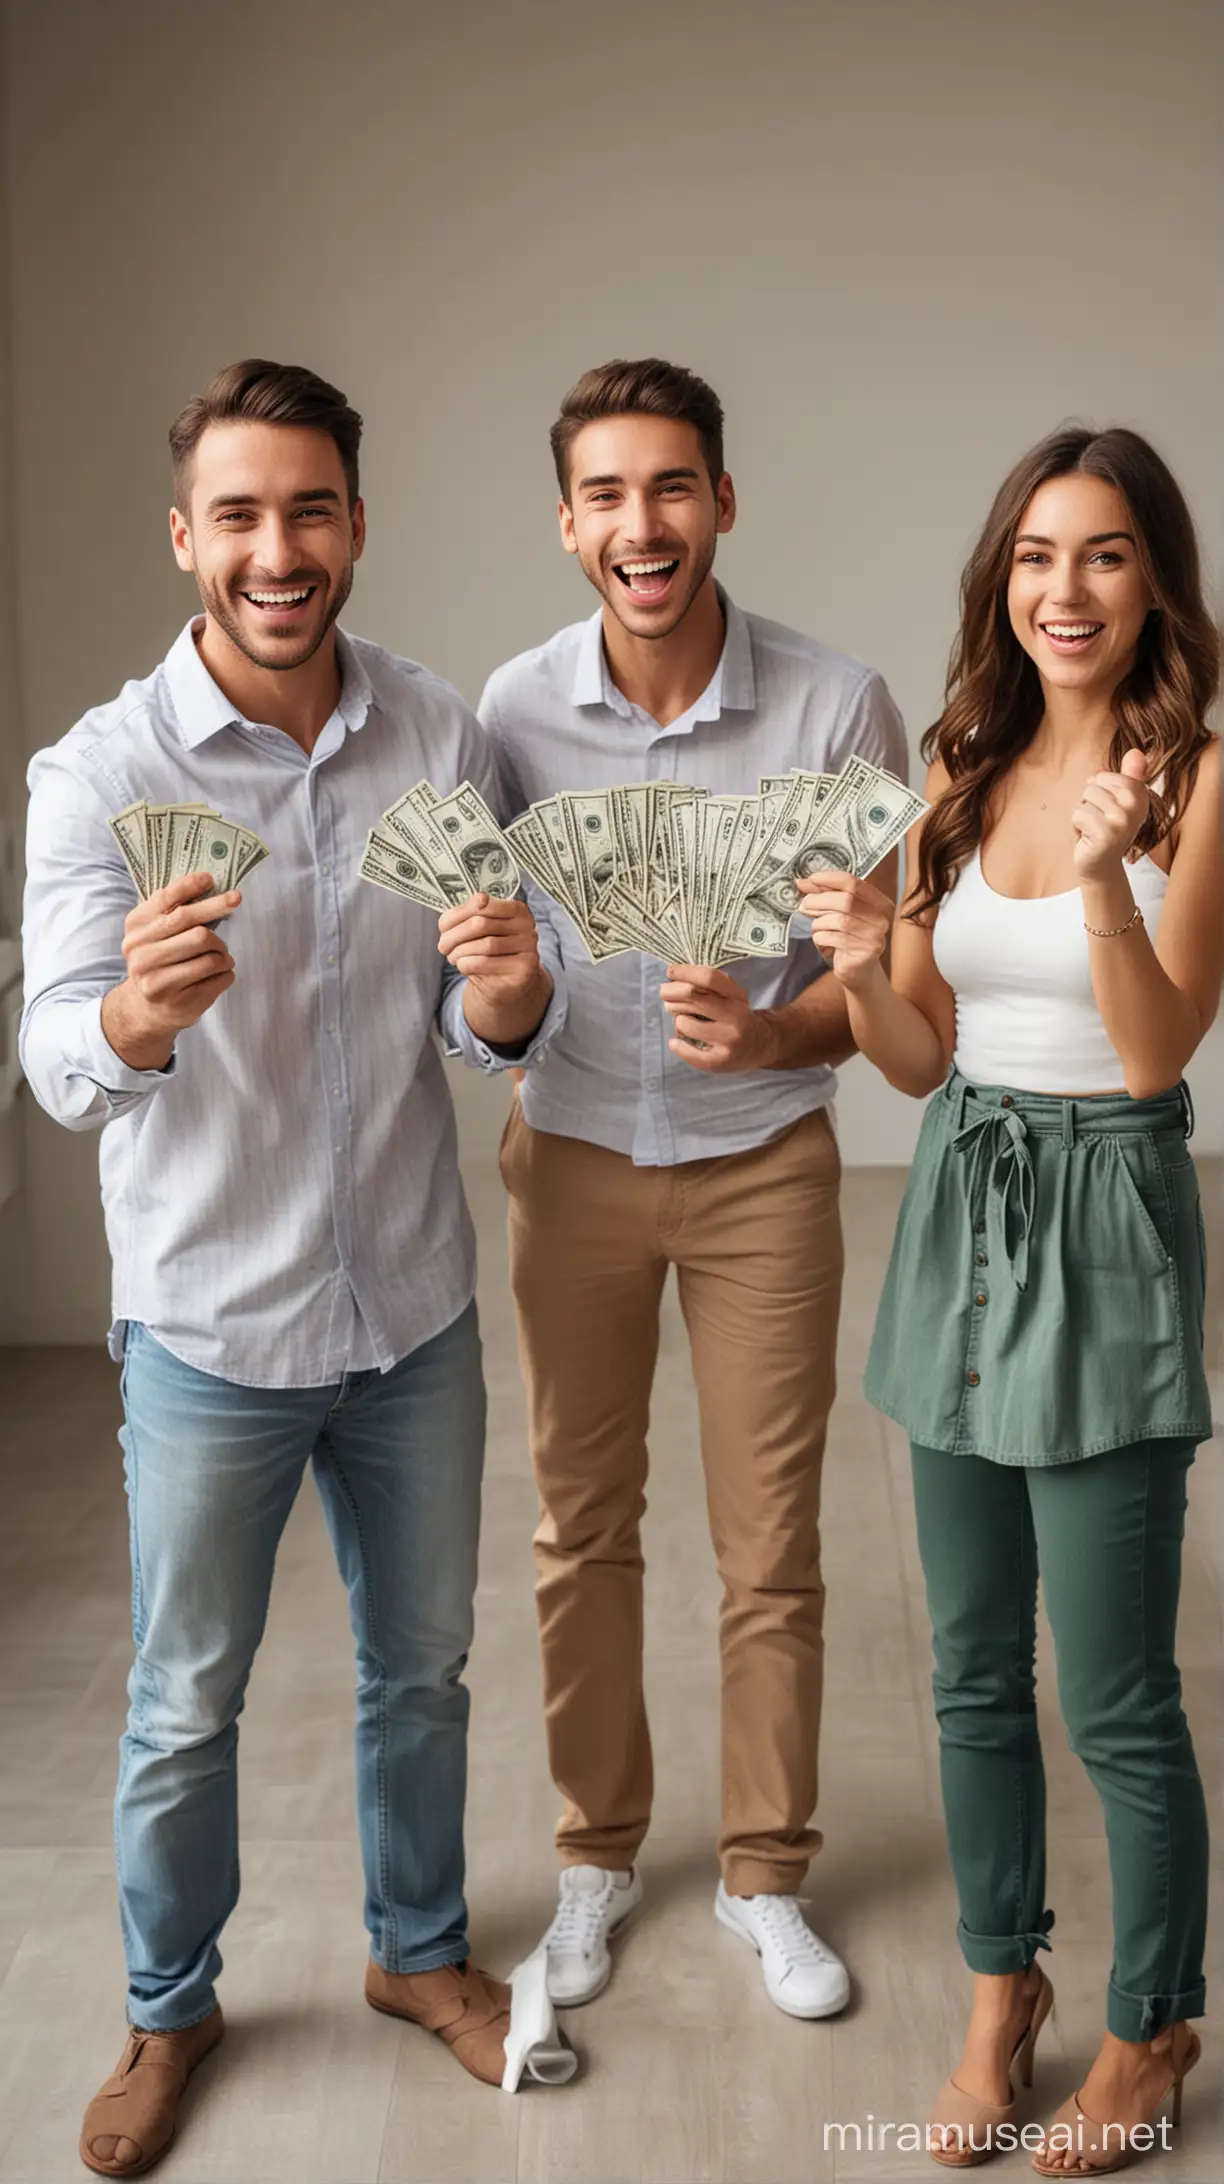 Joyful Quartet Celebrating Financial Success